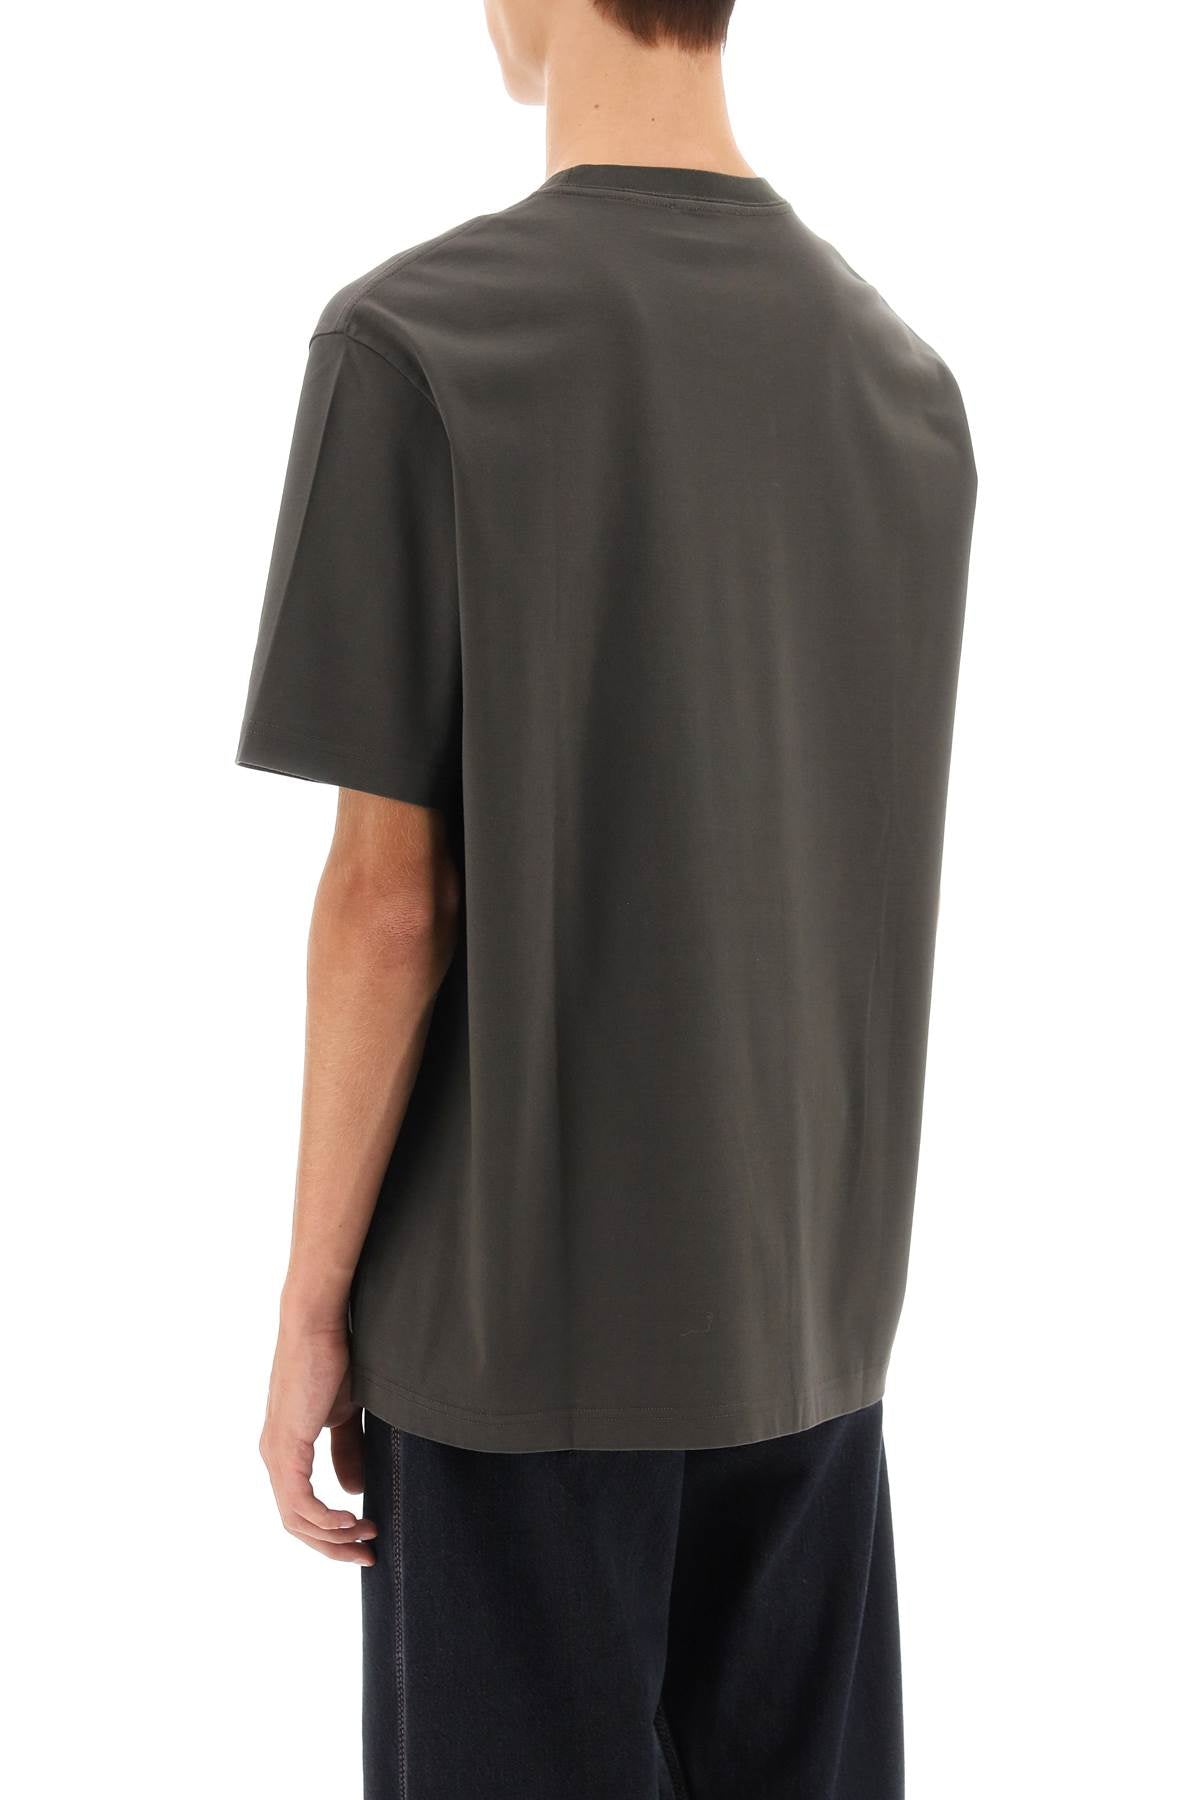 Lanvin Lanvin oversize t-shirt with logo lettering